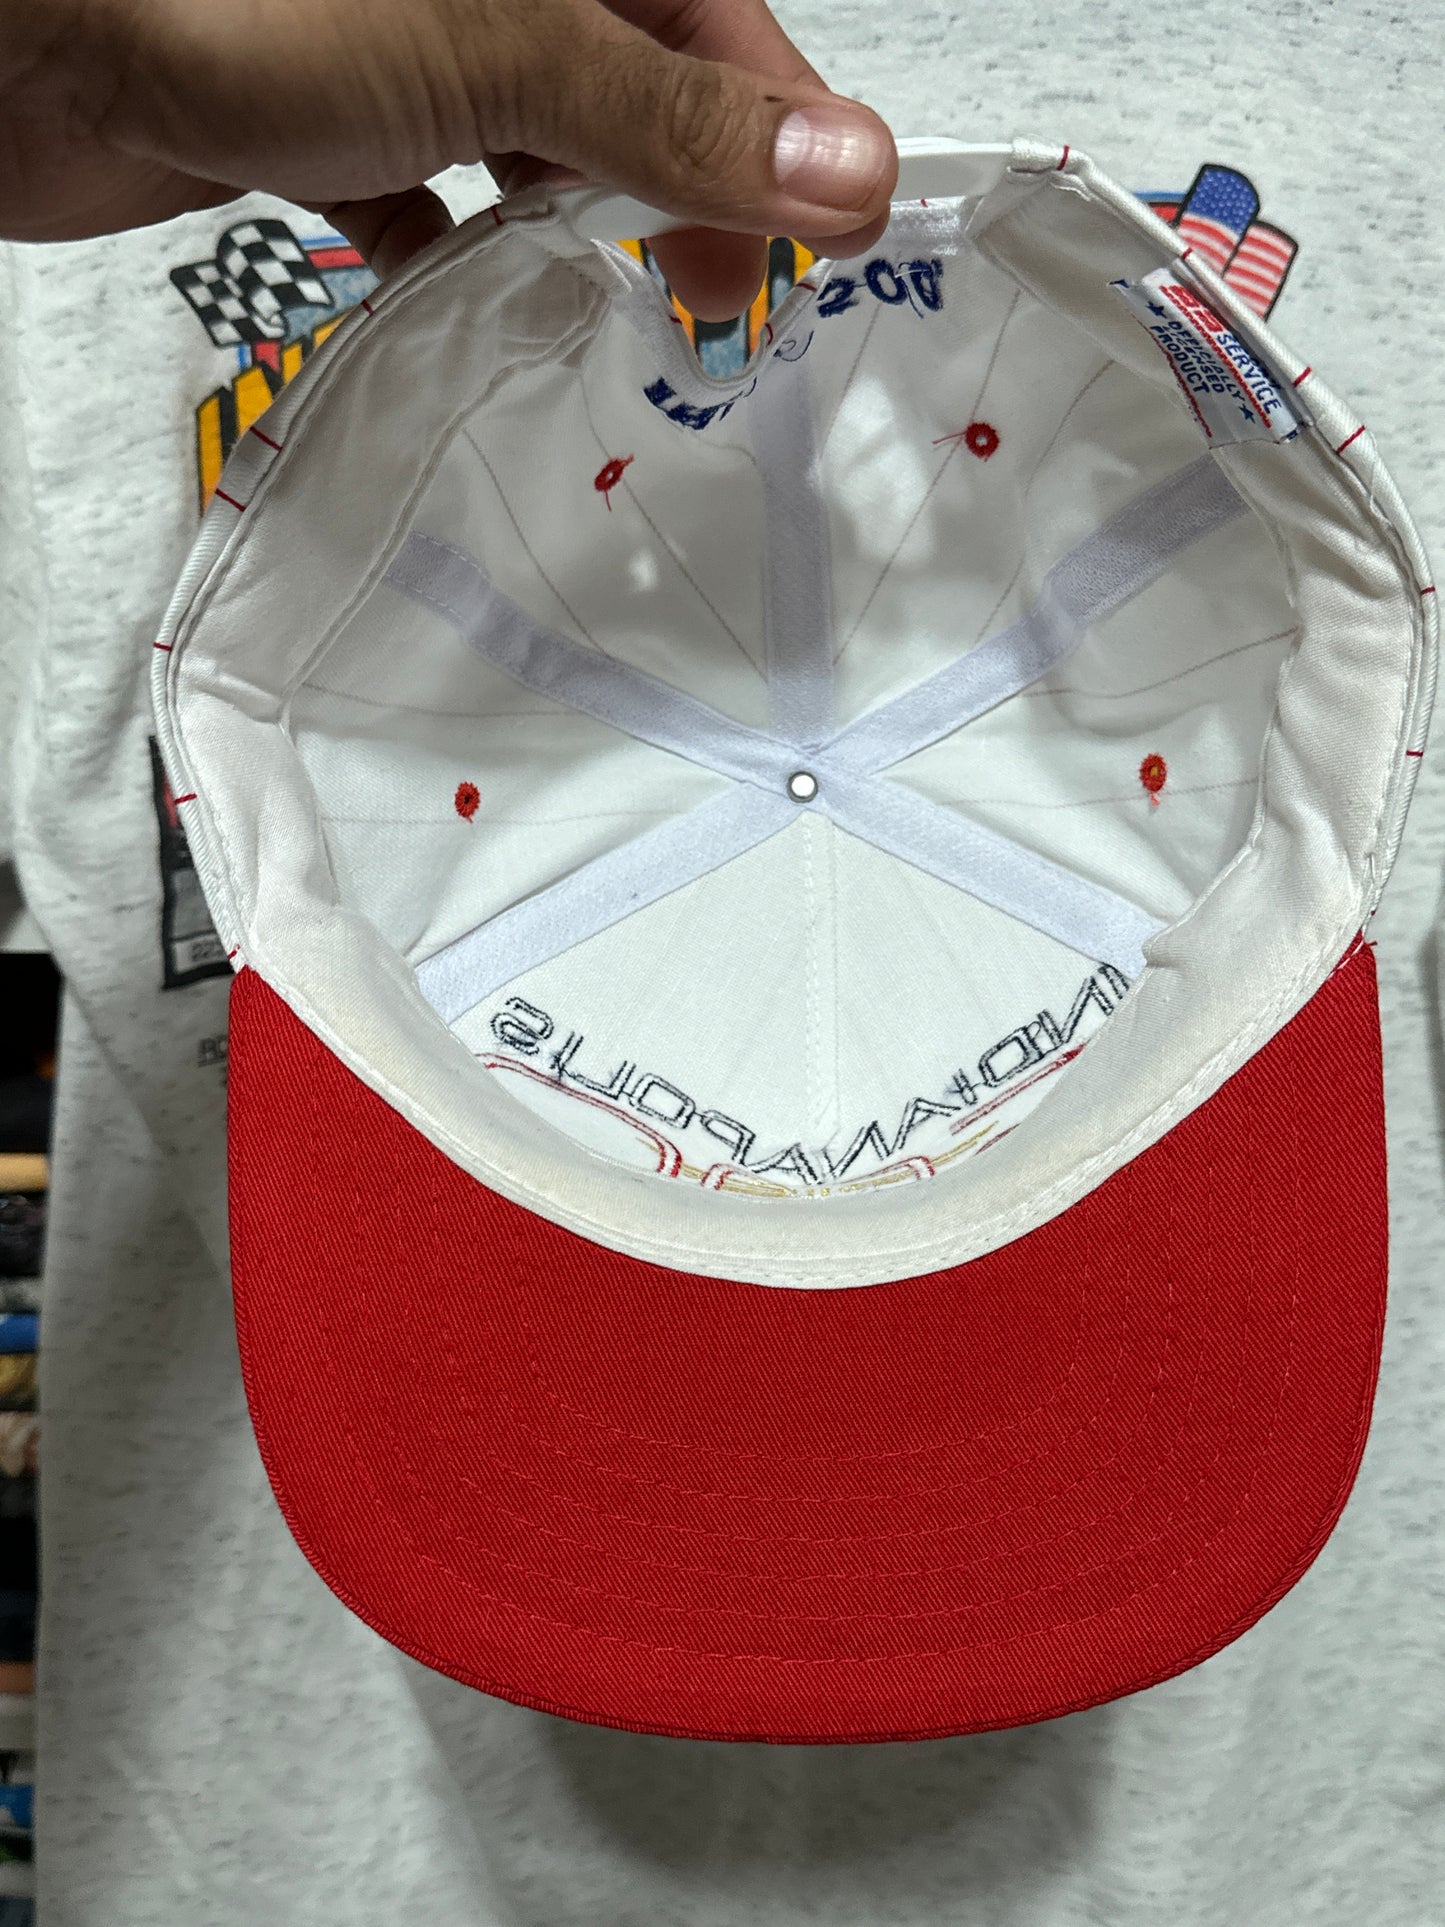 Vintage 90s Indy 500 Racing Big Graphic T-Shirt and Snapback Hat Bundle